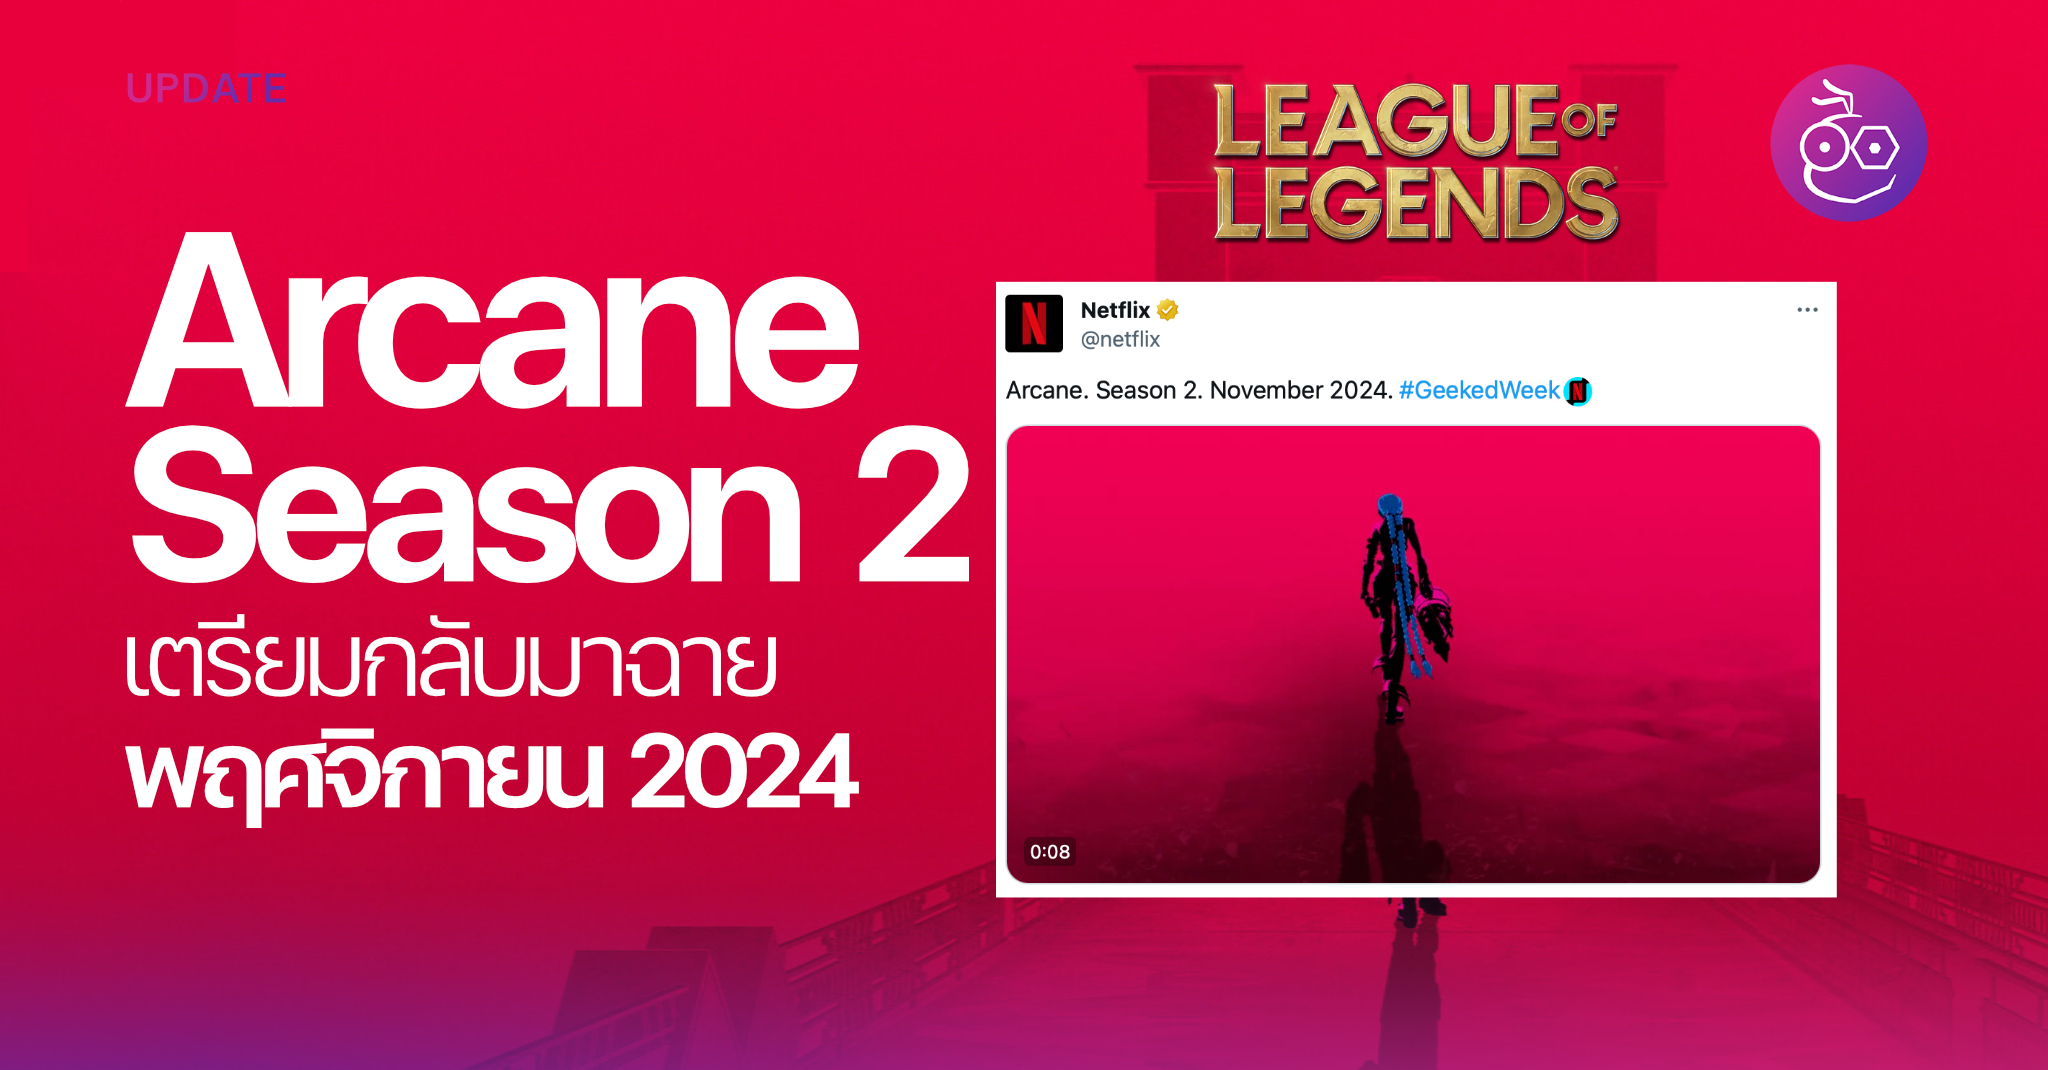 Netflix Confirms Arcane Season 2 Premiere in November 2024 What Fans